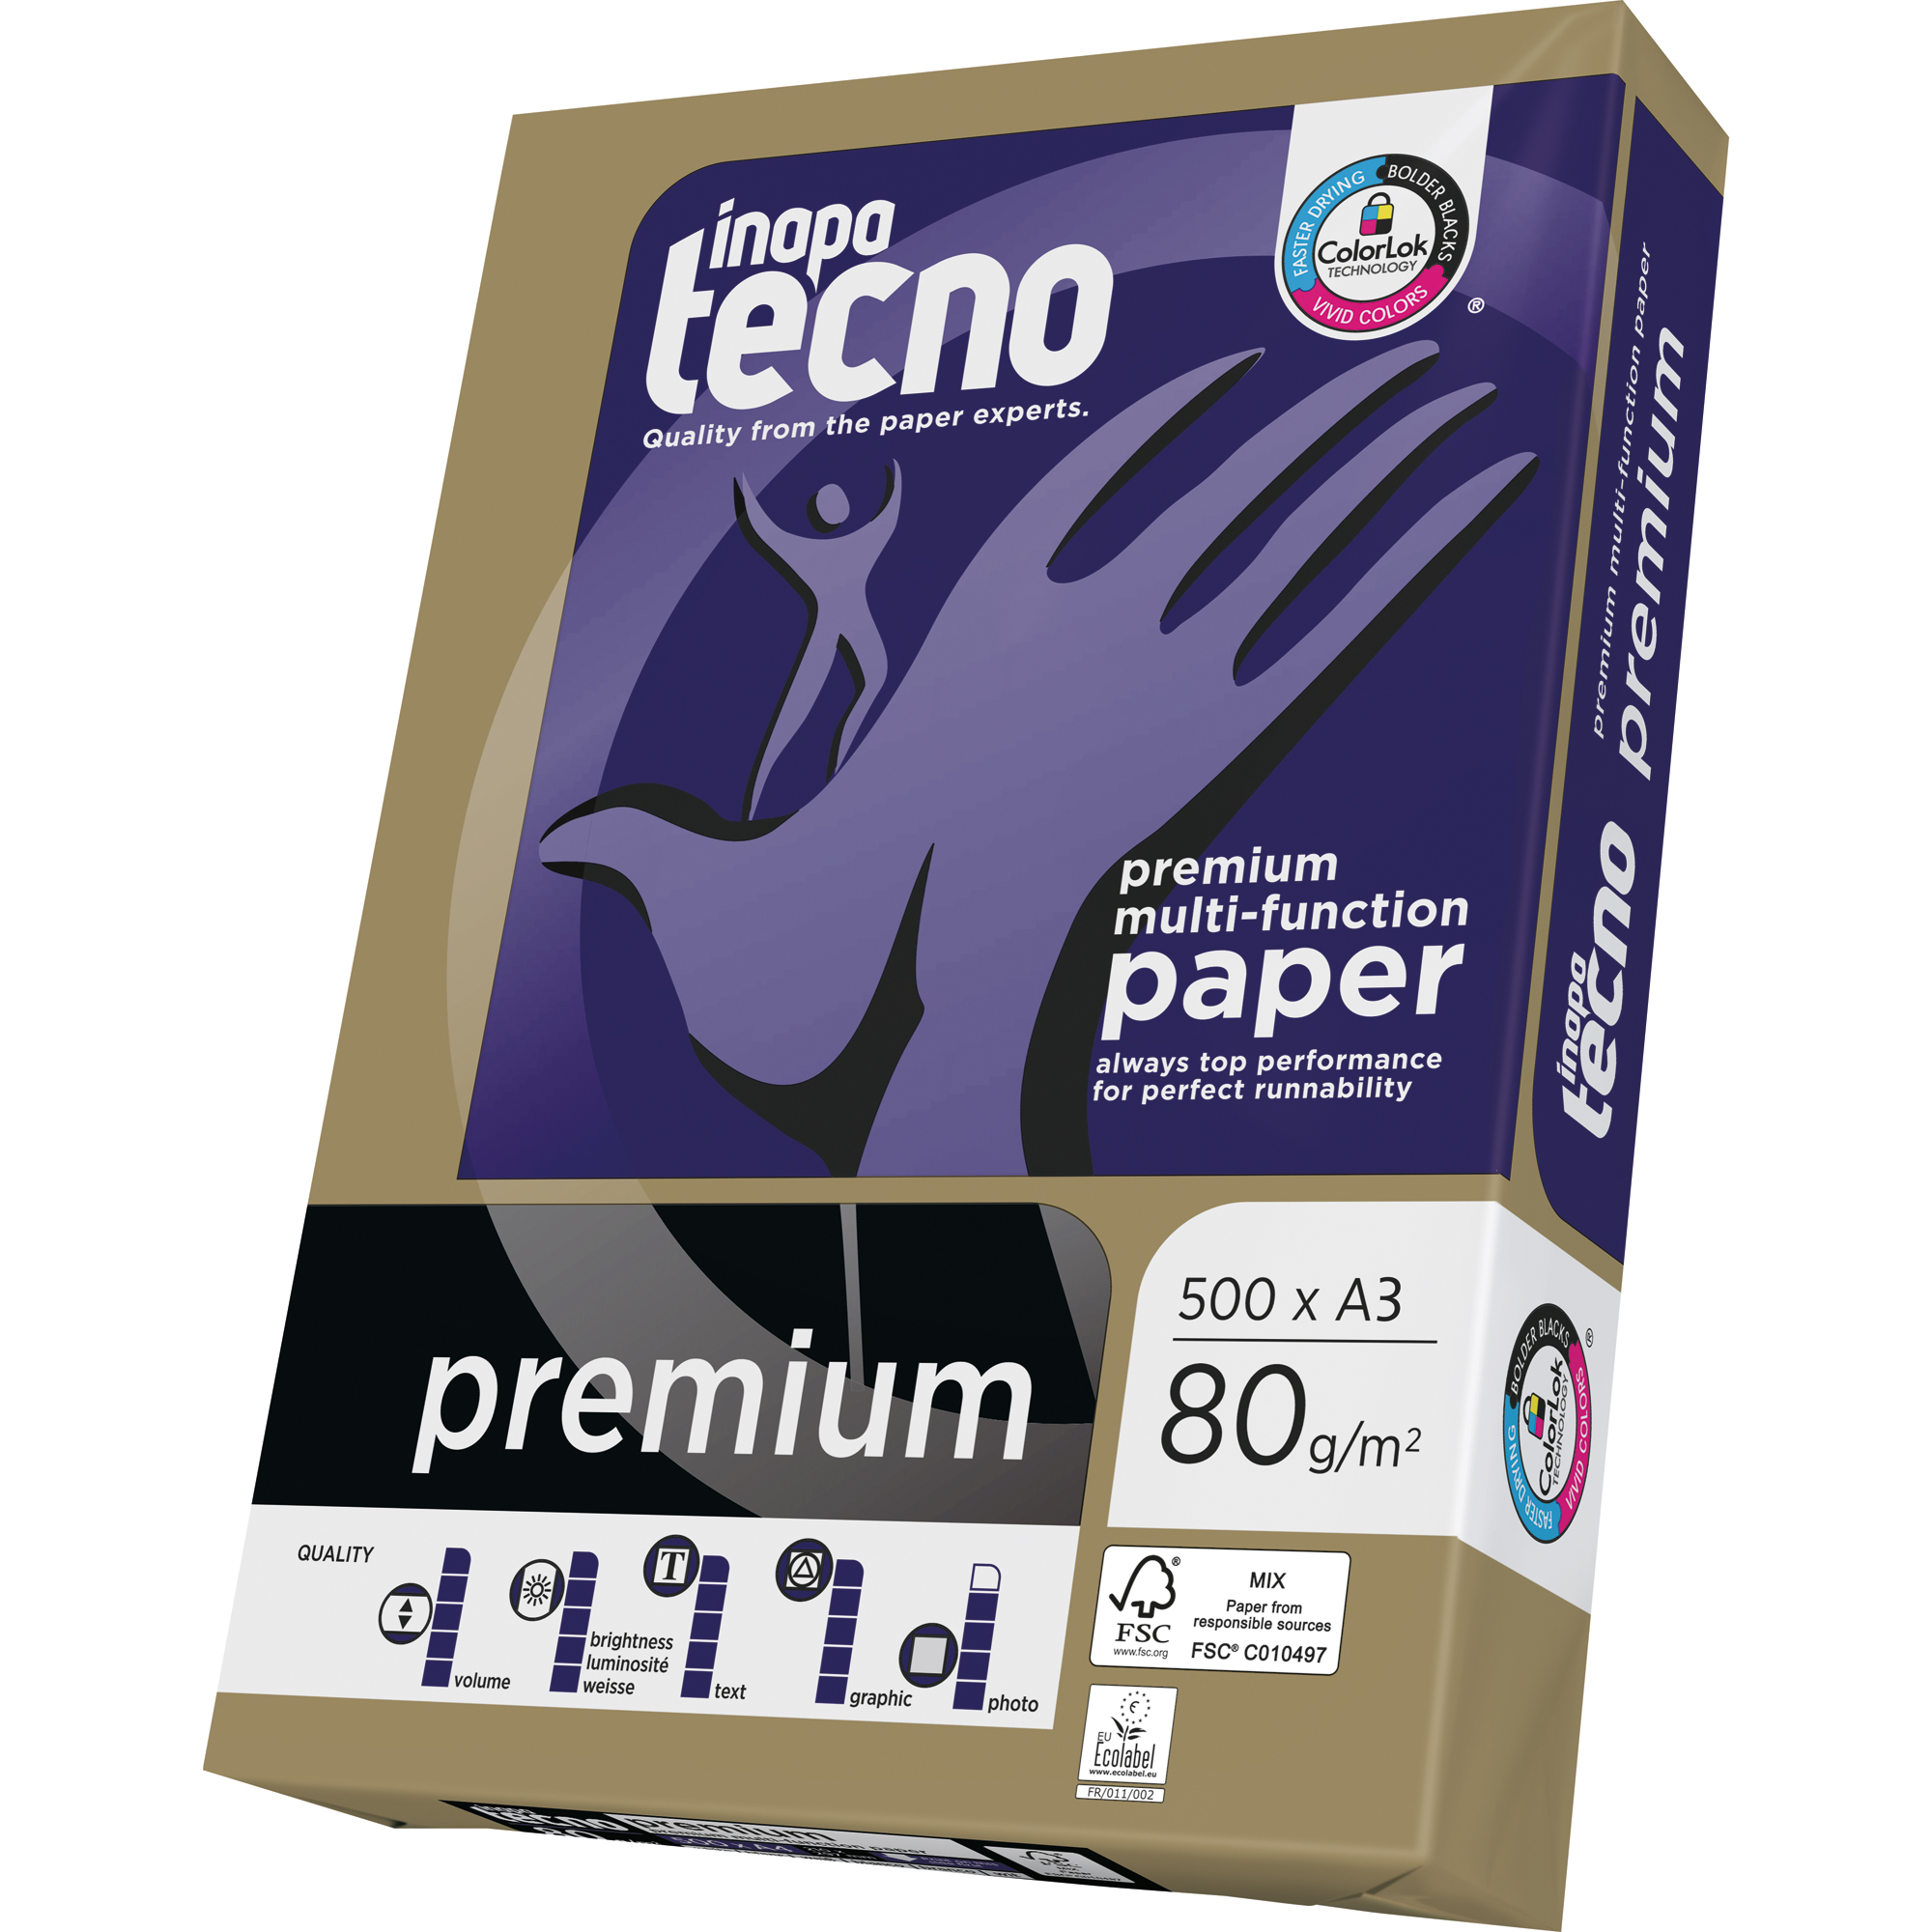 A3 TECNO Packung 526108019422 1 INAPA Kopierpapier Bl./Pack. A3 Kopierpapier DIN premium 500